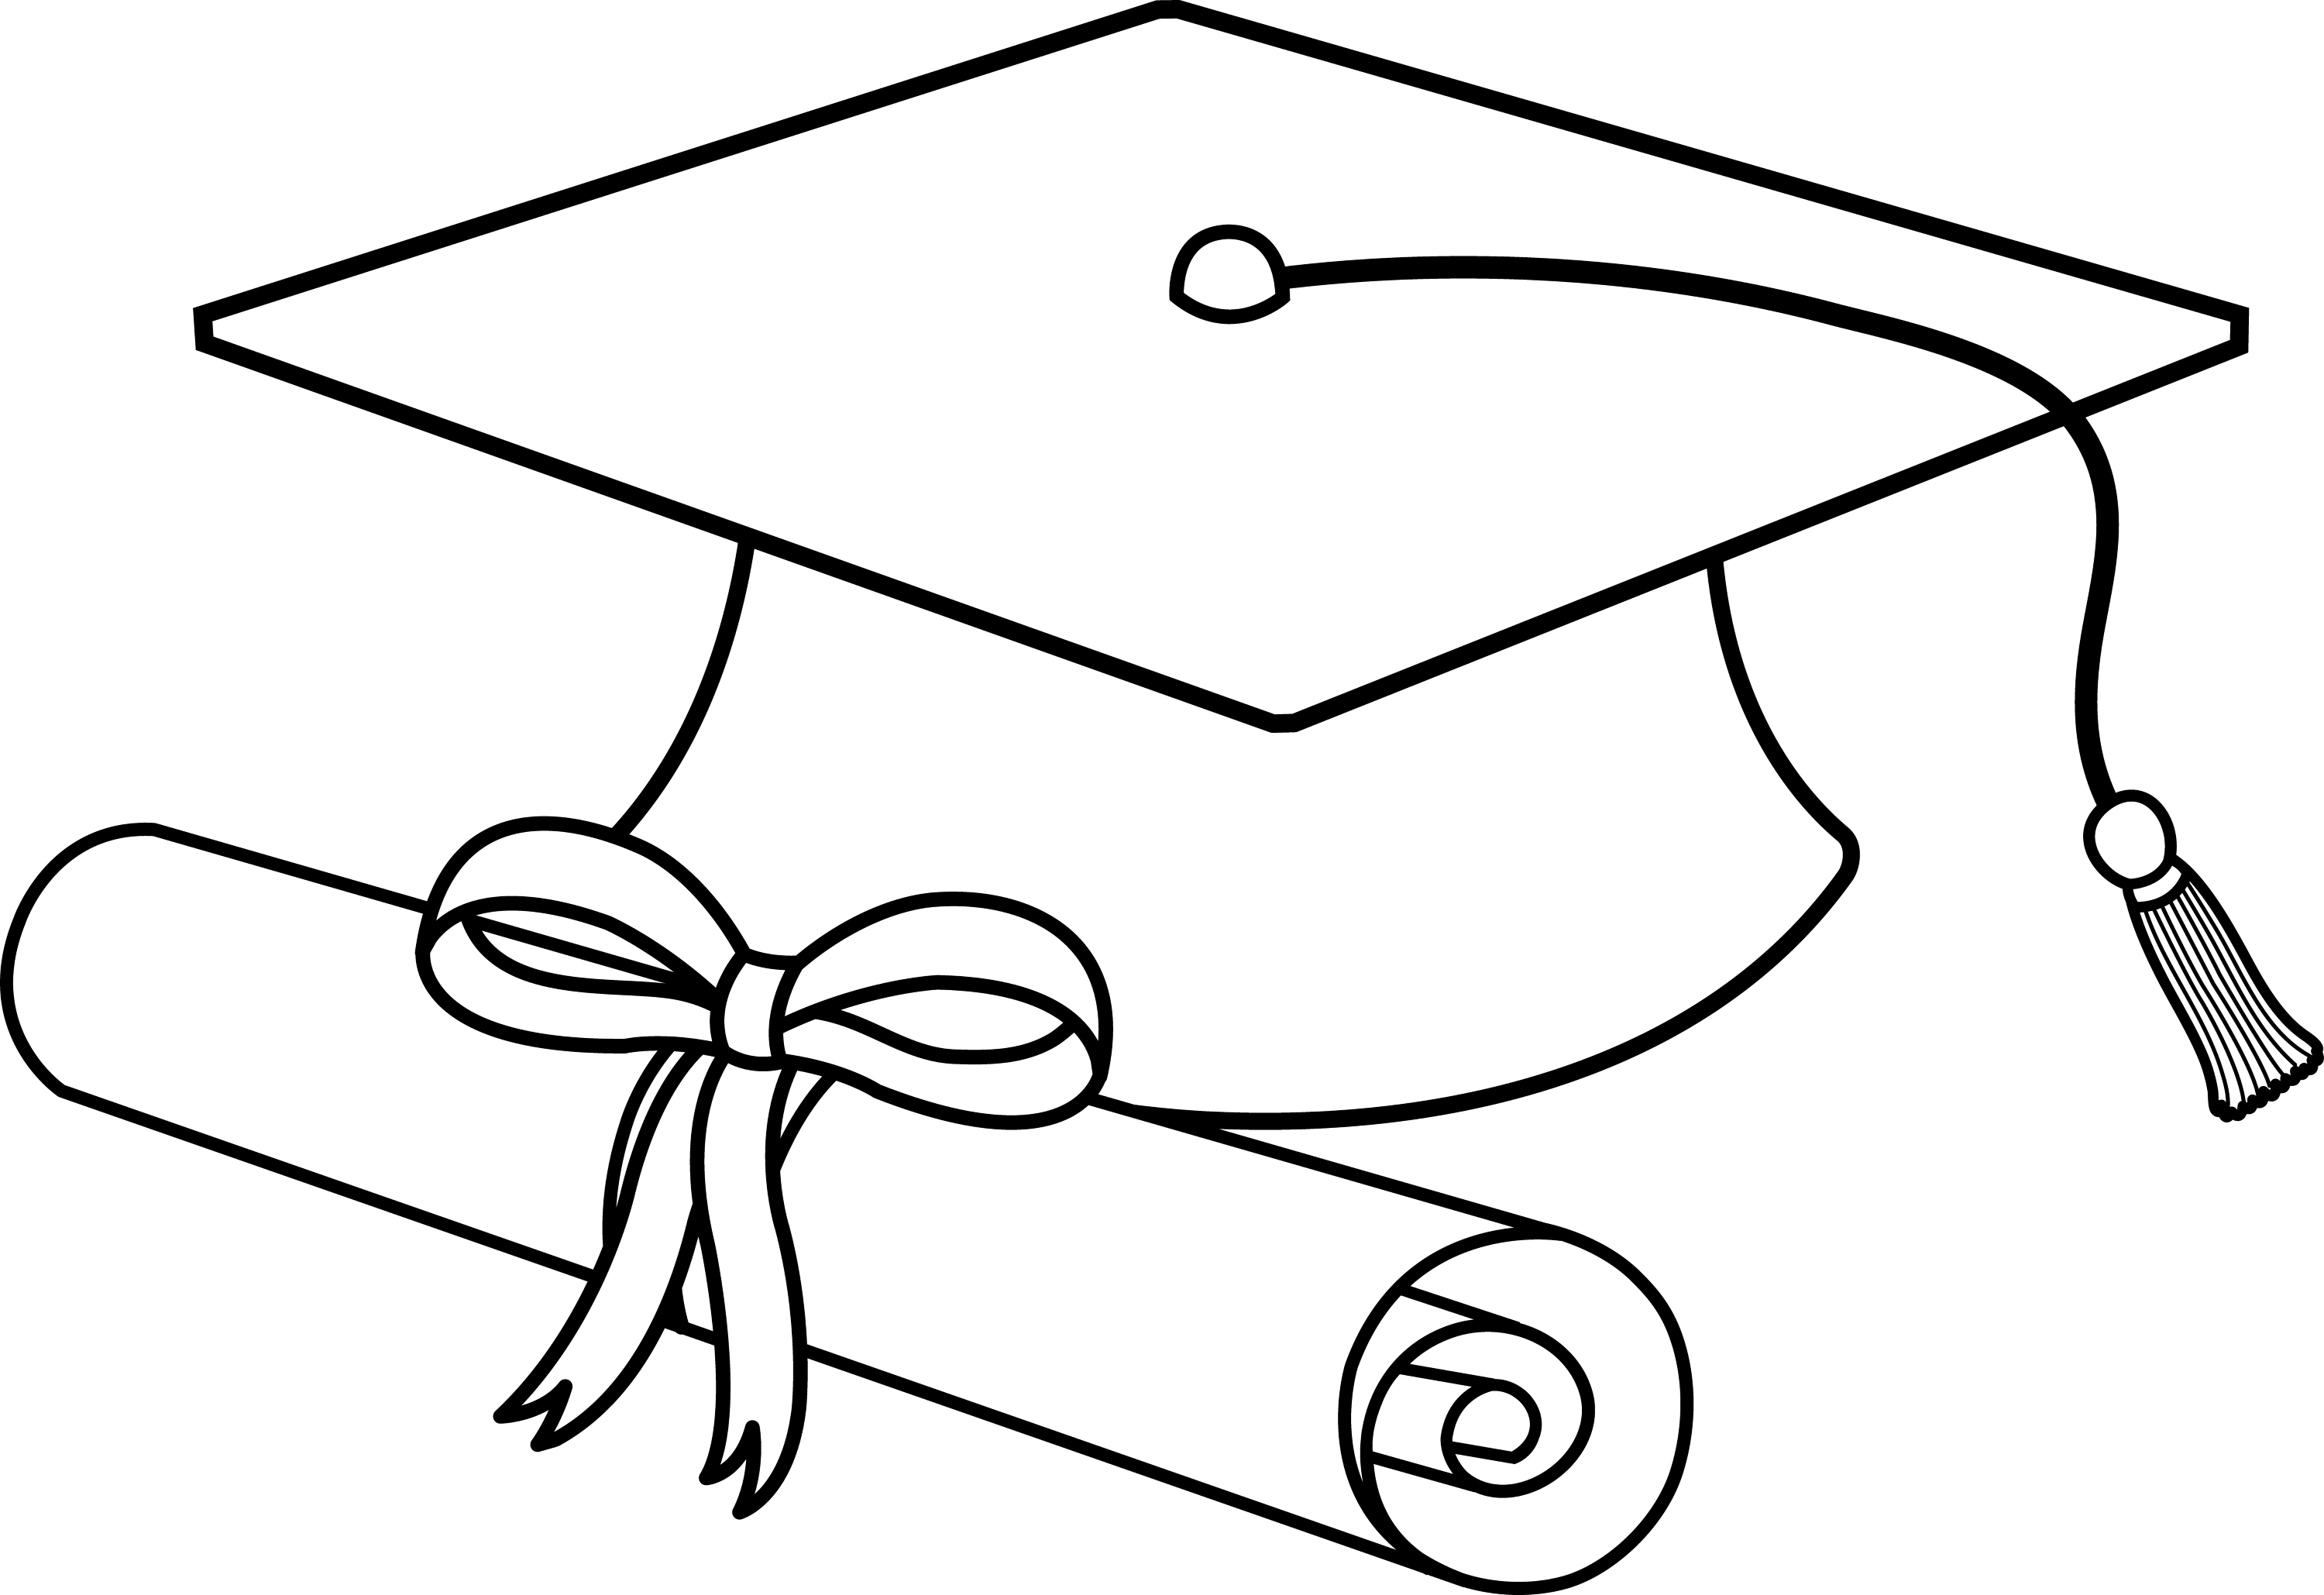 free clipart graduation cap and diploma - photo #24